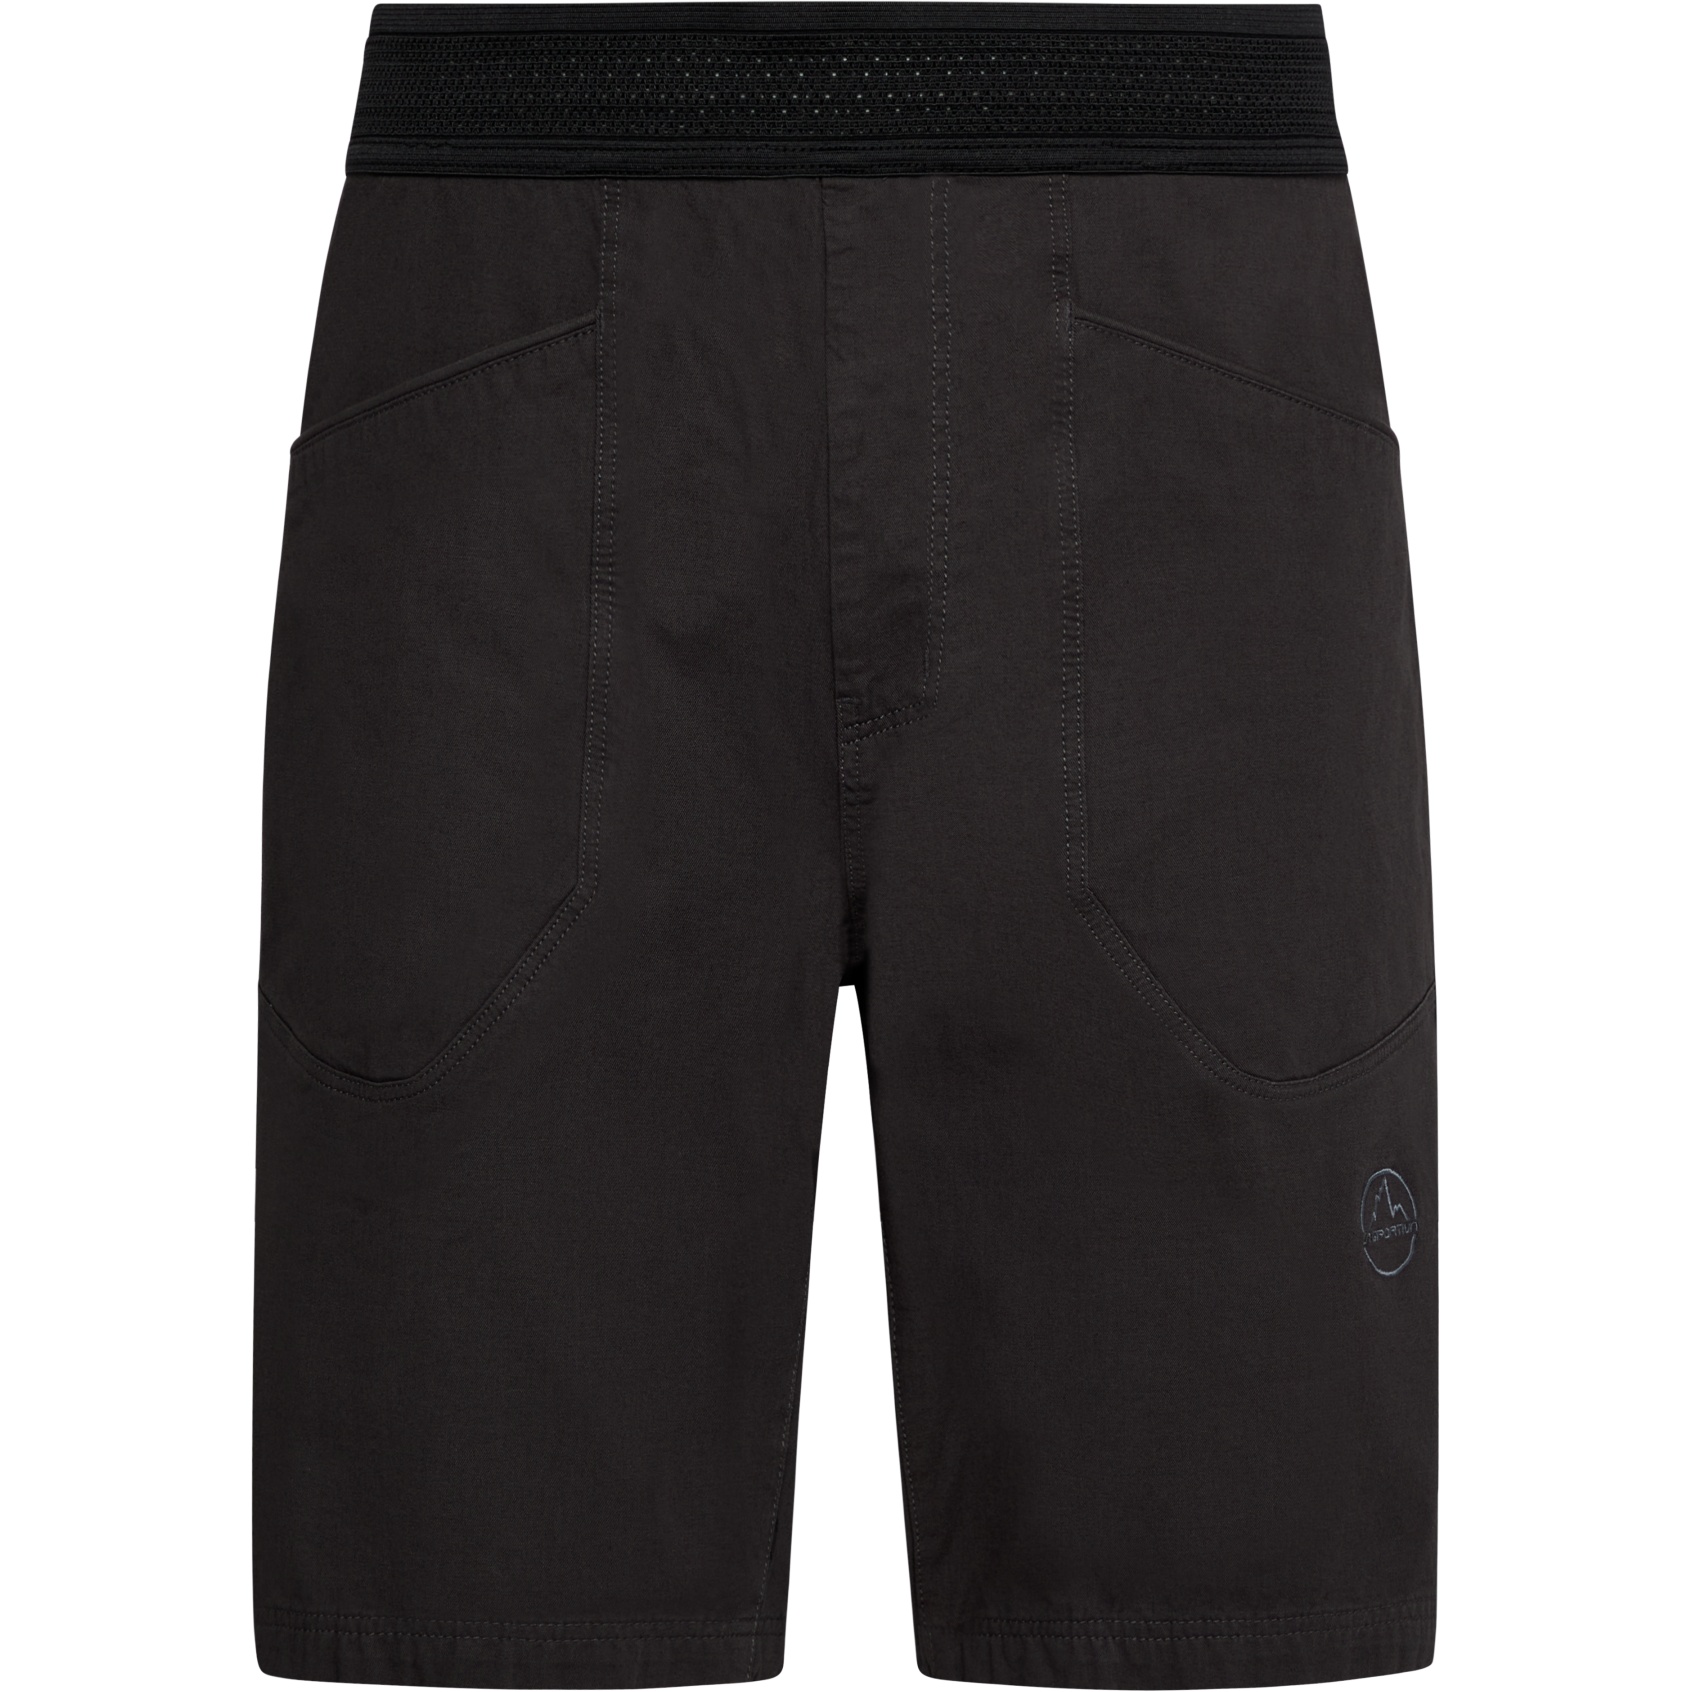 Produktbild von La Sportiva Flatanger Shorts Herren - Carbon/Slate